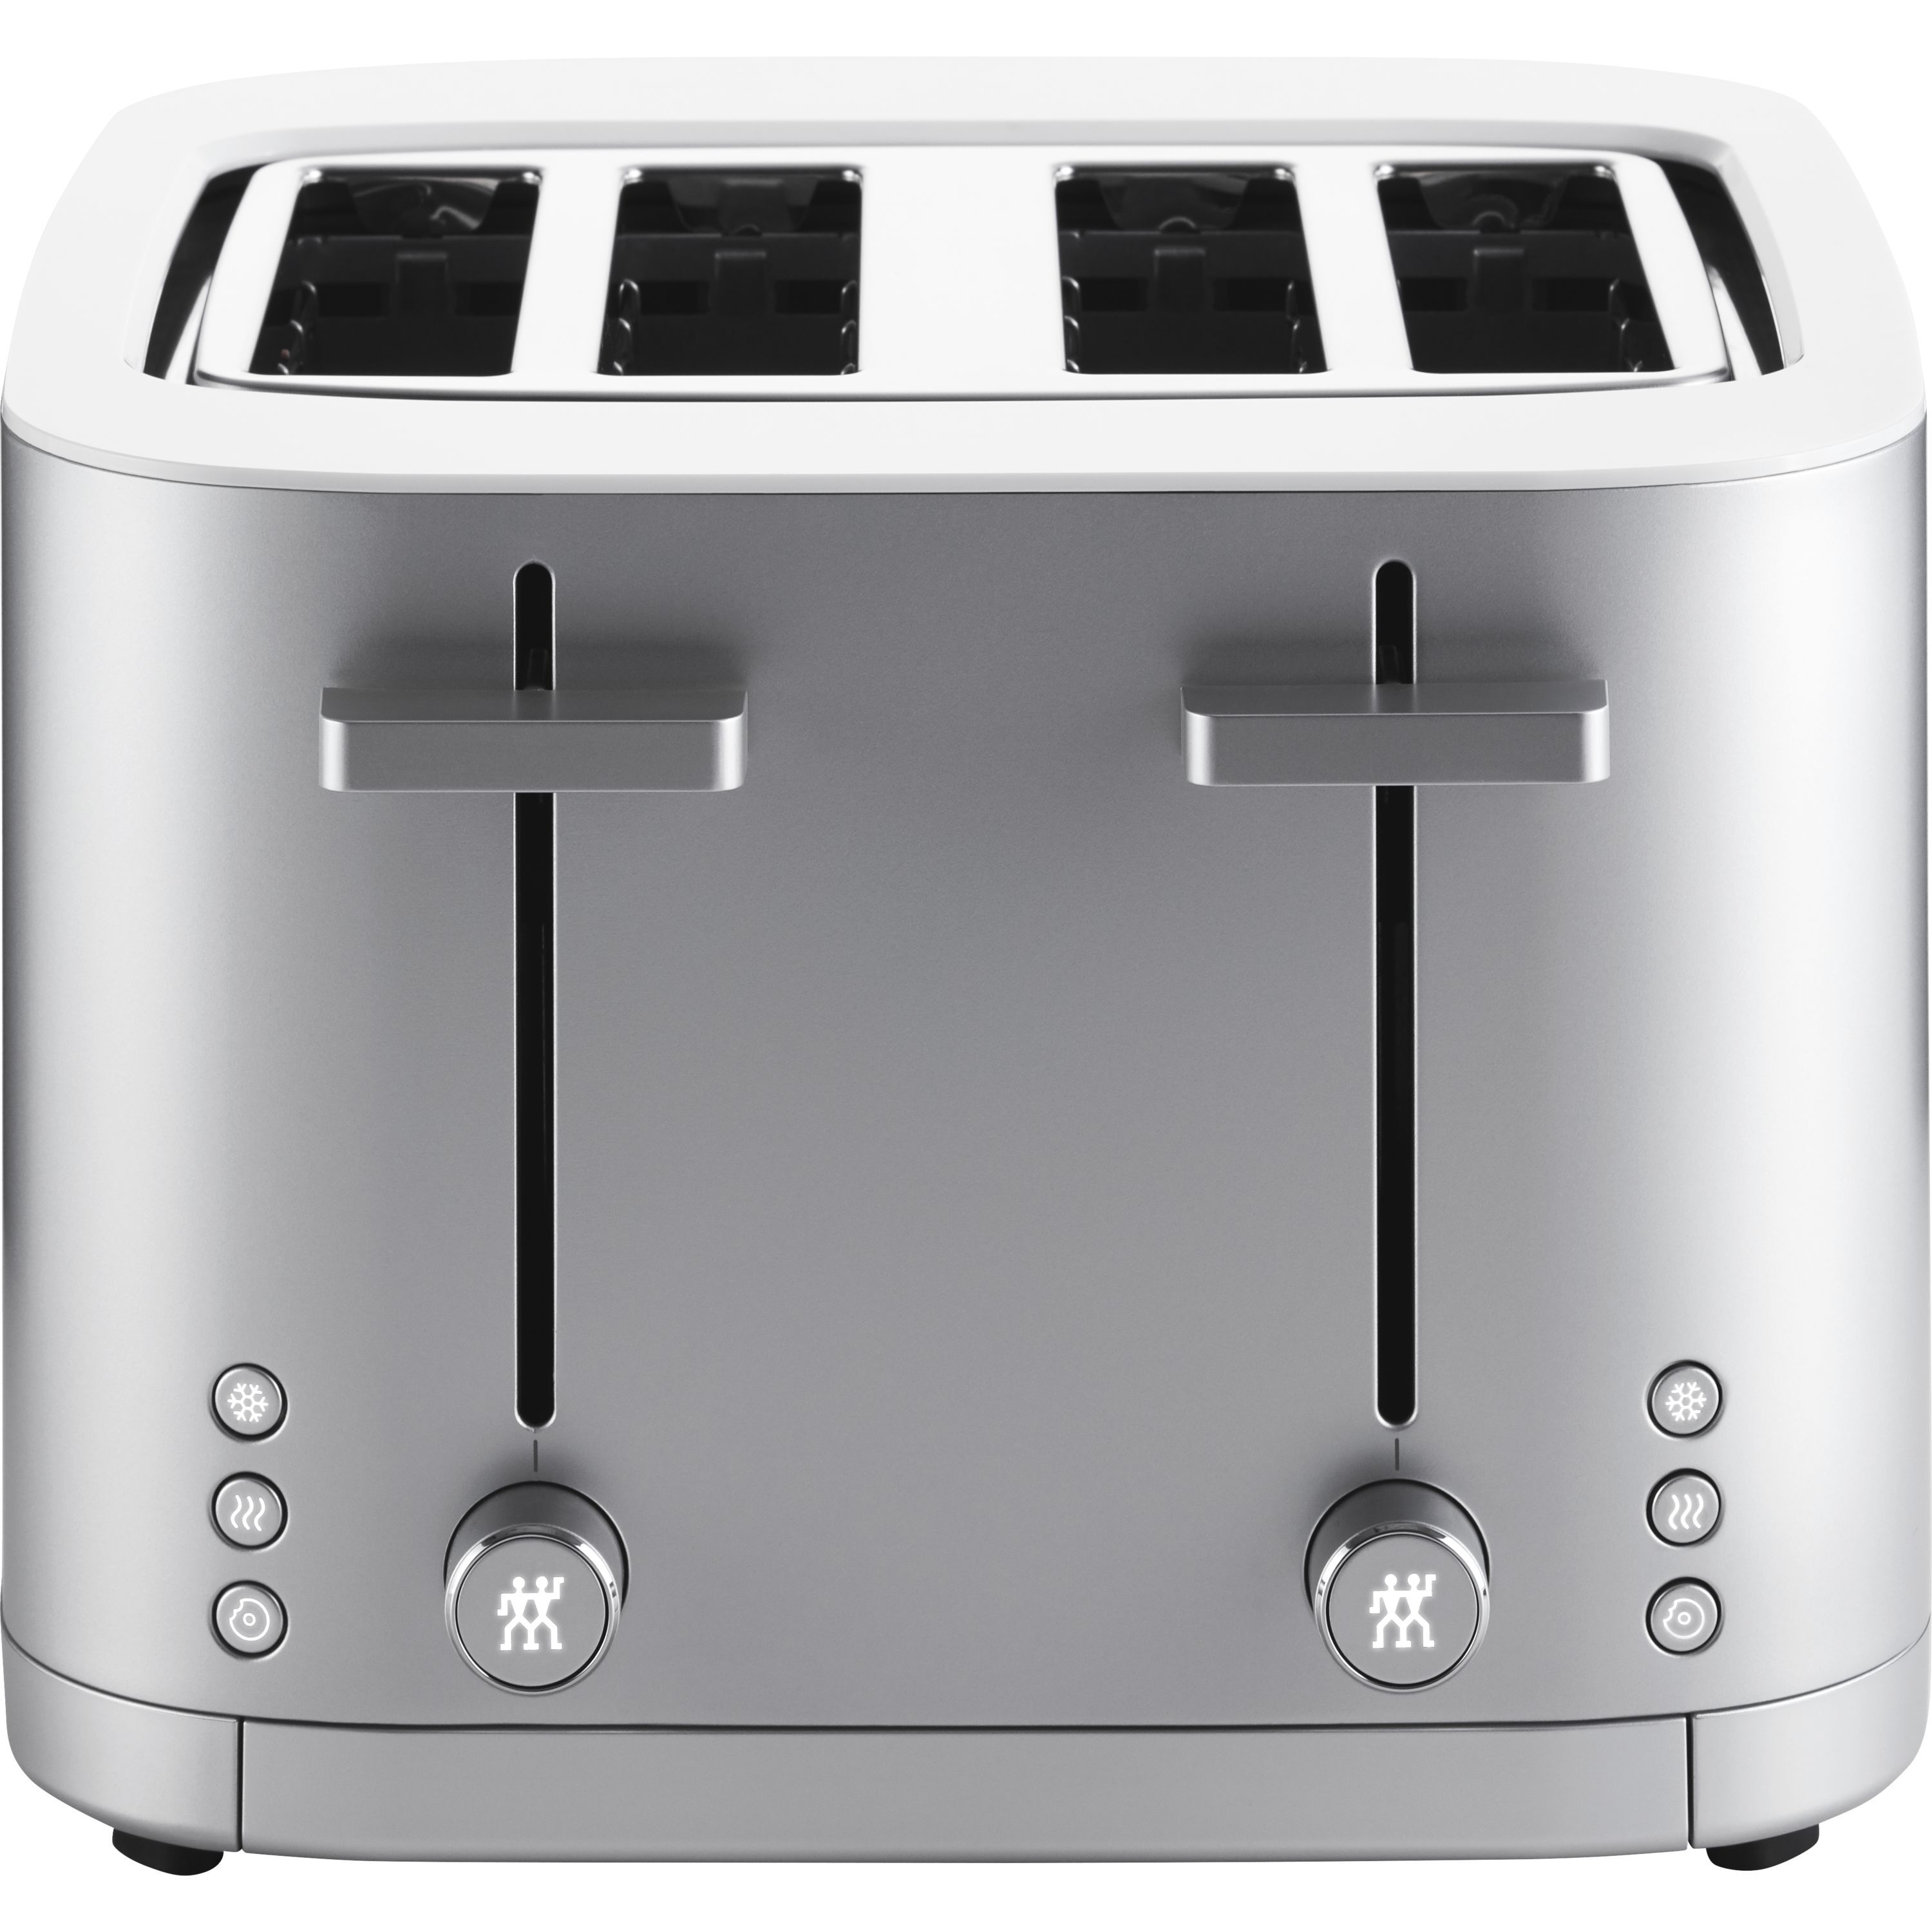 Morphy Richards Kettle 4 Slice Toaster & Storage Canister Set Matching Black/Chrome Highlights 